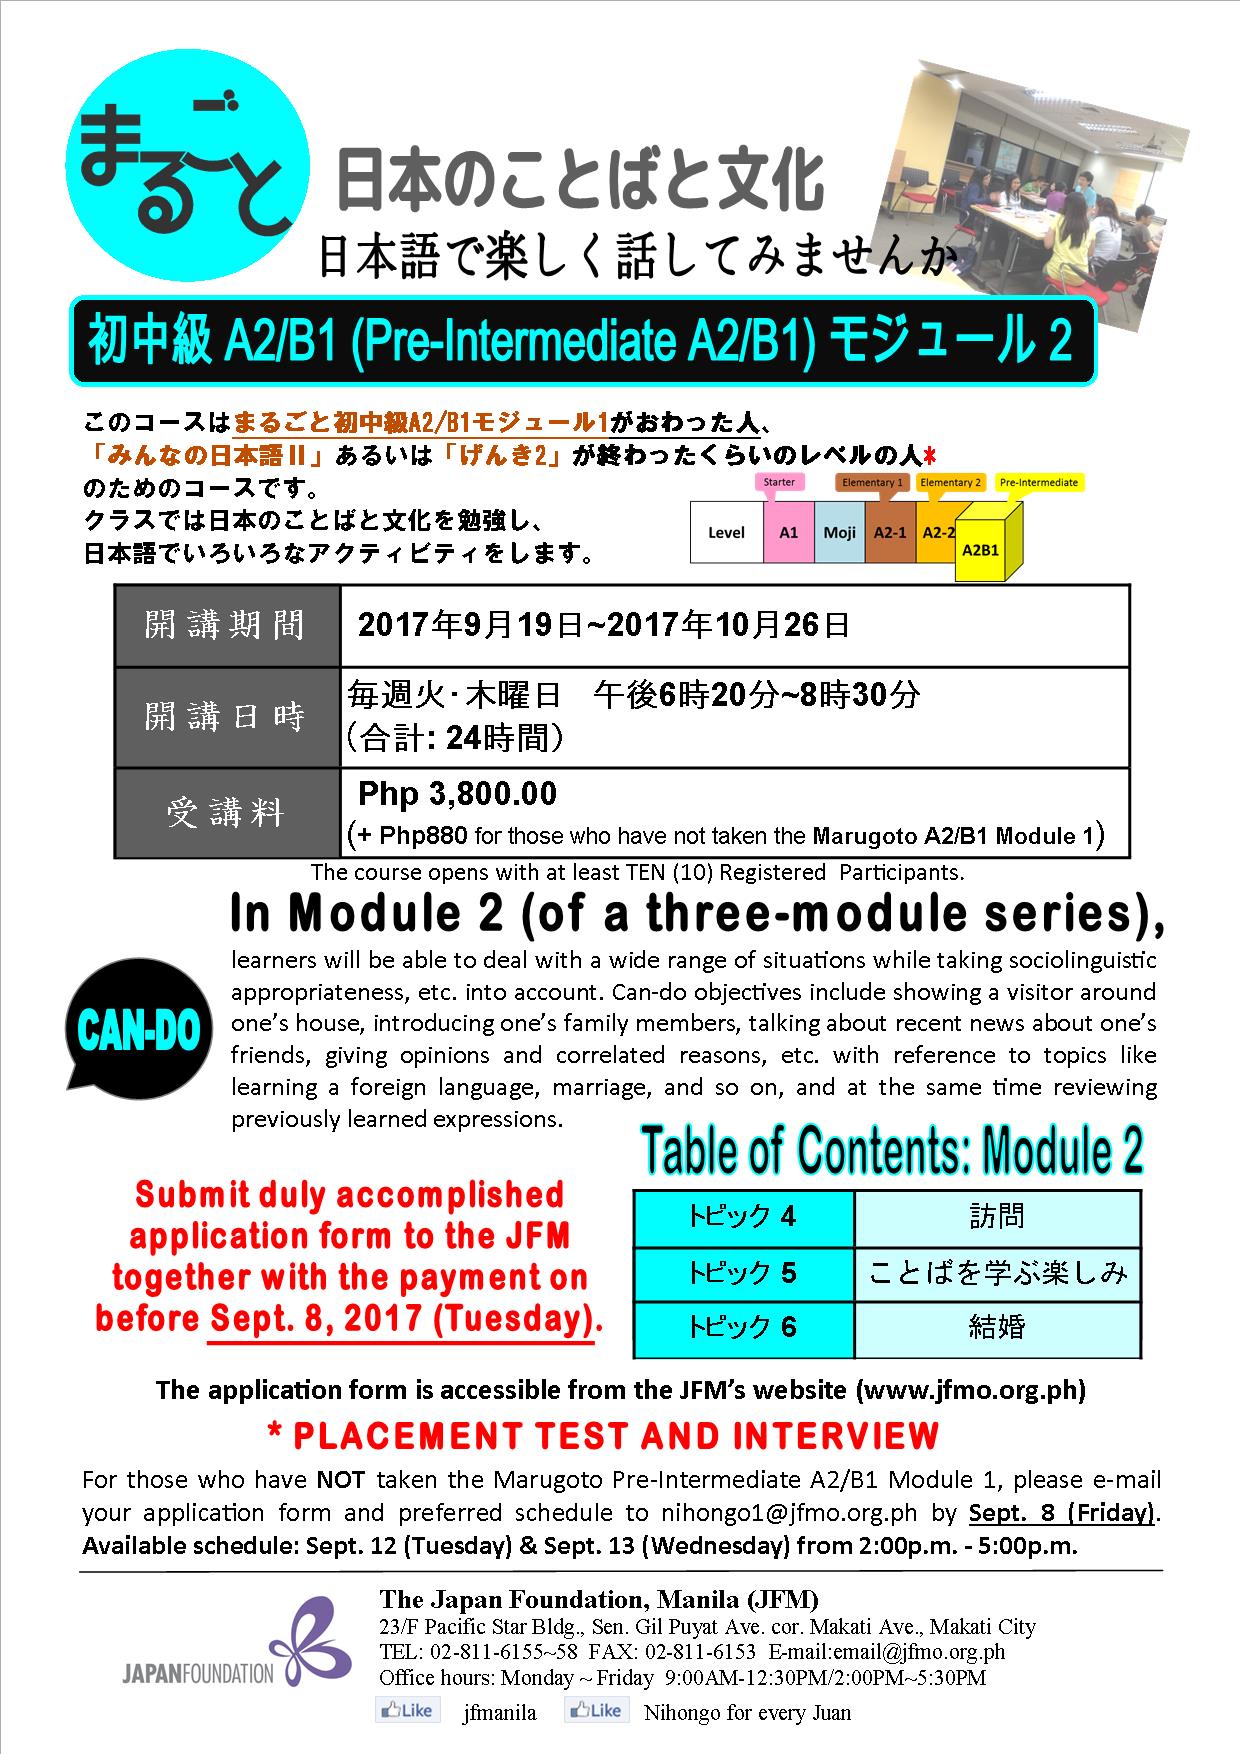 MARUGOTO Pre-Intermediate Japanese: A2/B1 Module 2